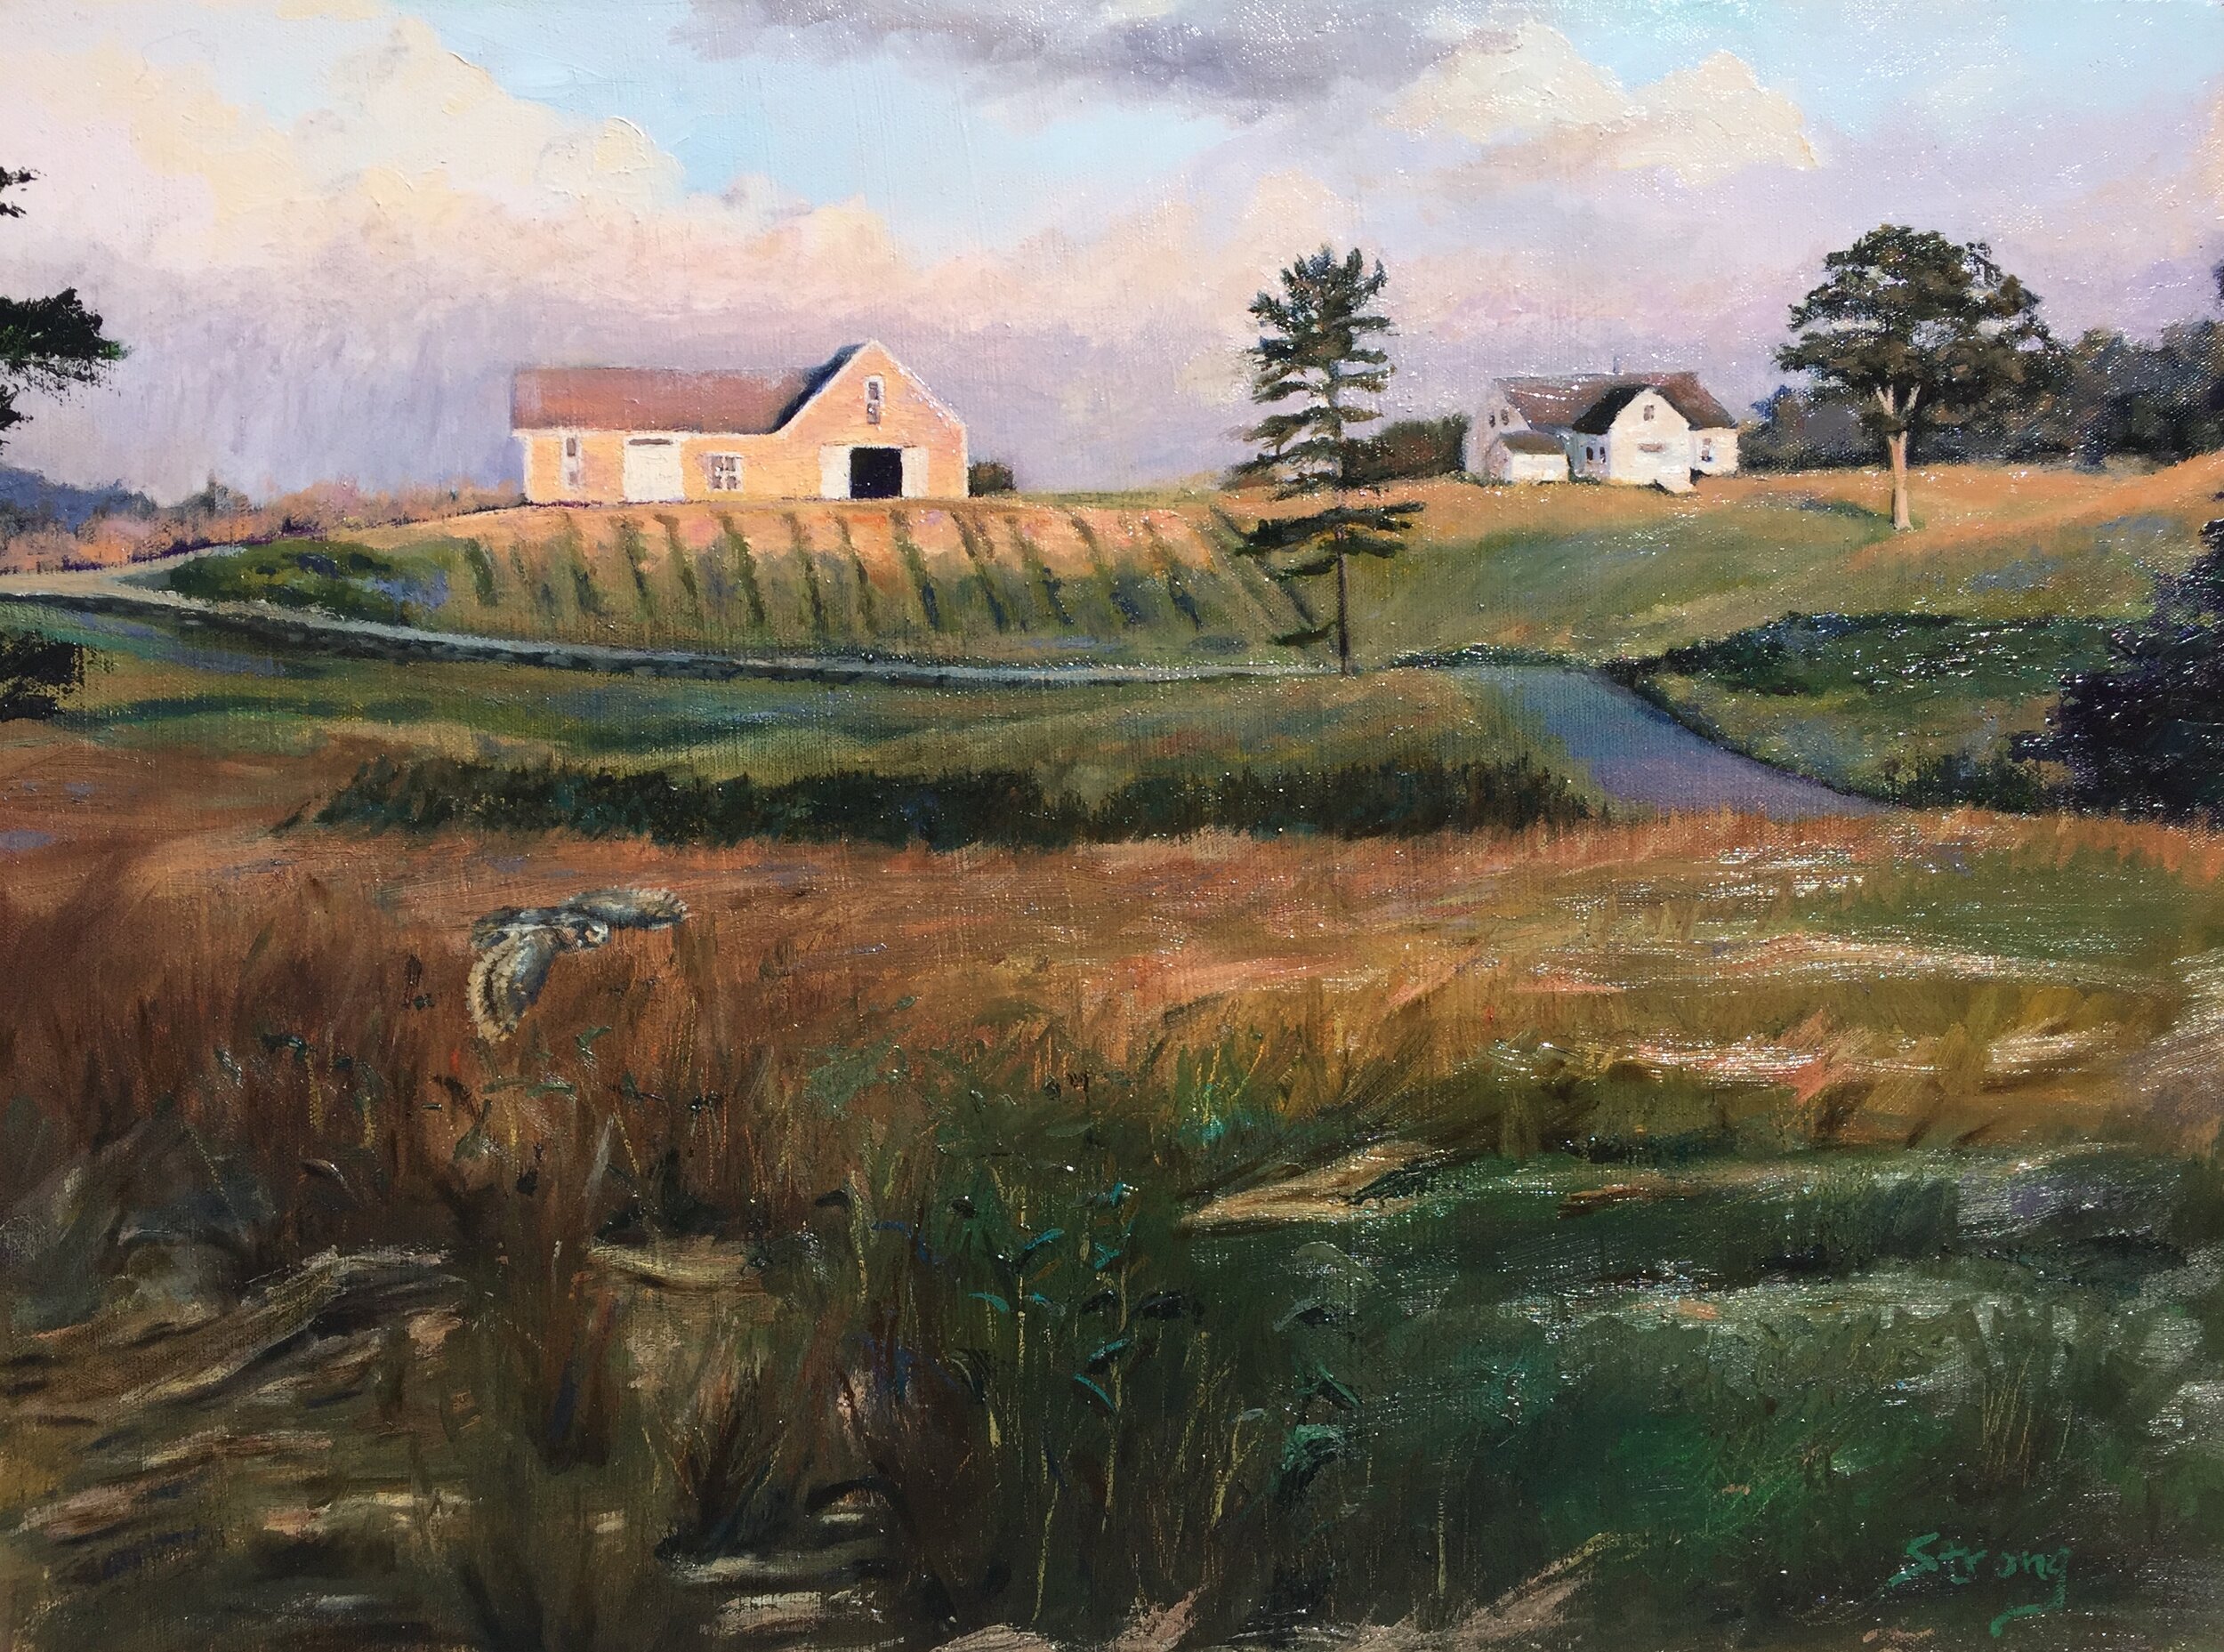 Betsy Wyeths' Homestead, oil on canvas, 18" x 24"